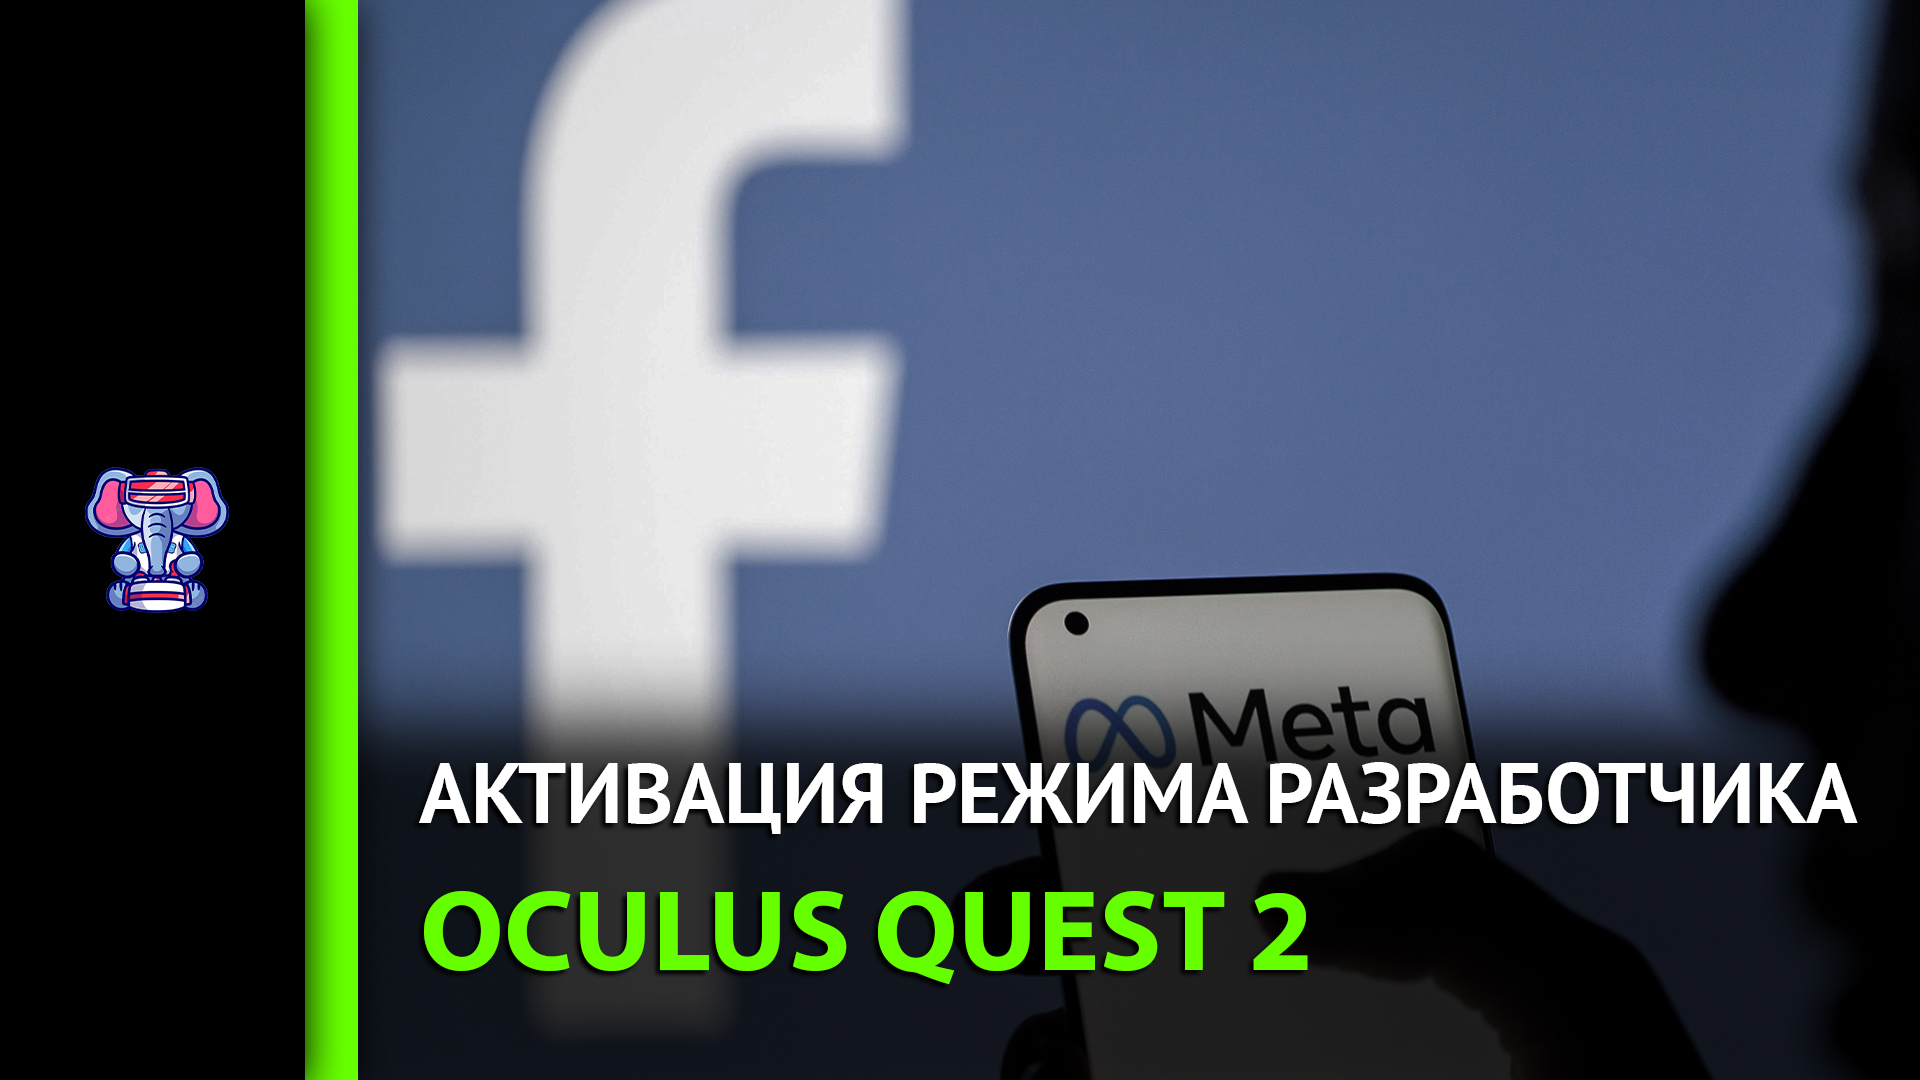 Активация Oculus Quest 2. Окно режим разработчика Окулус. Oculus quest 2 включить режим разработчика